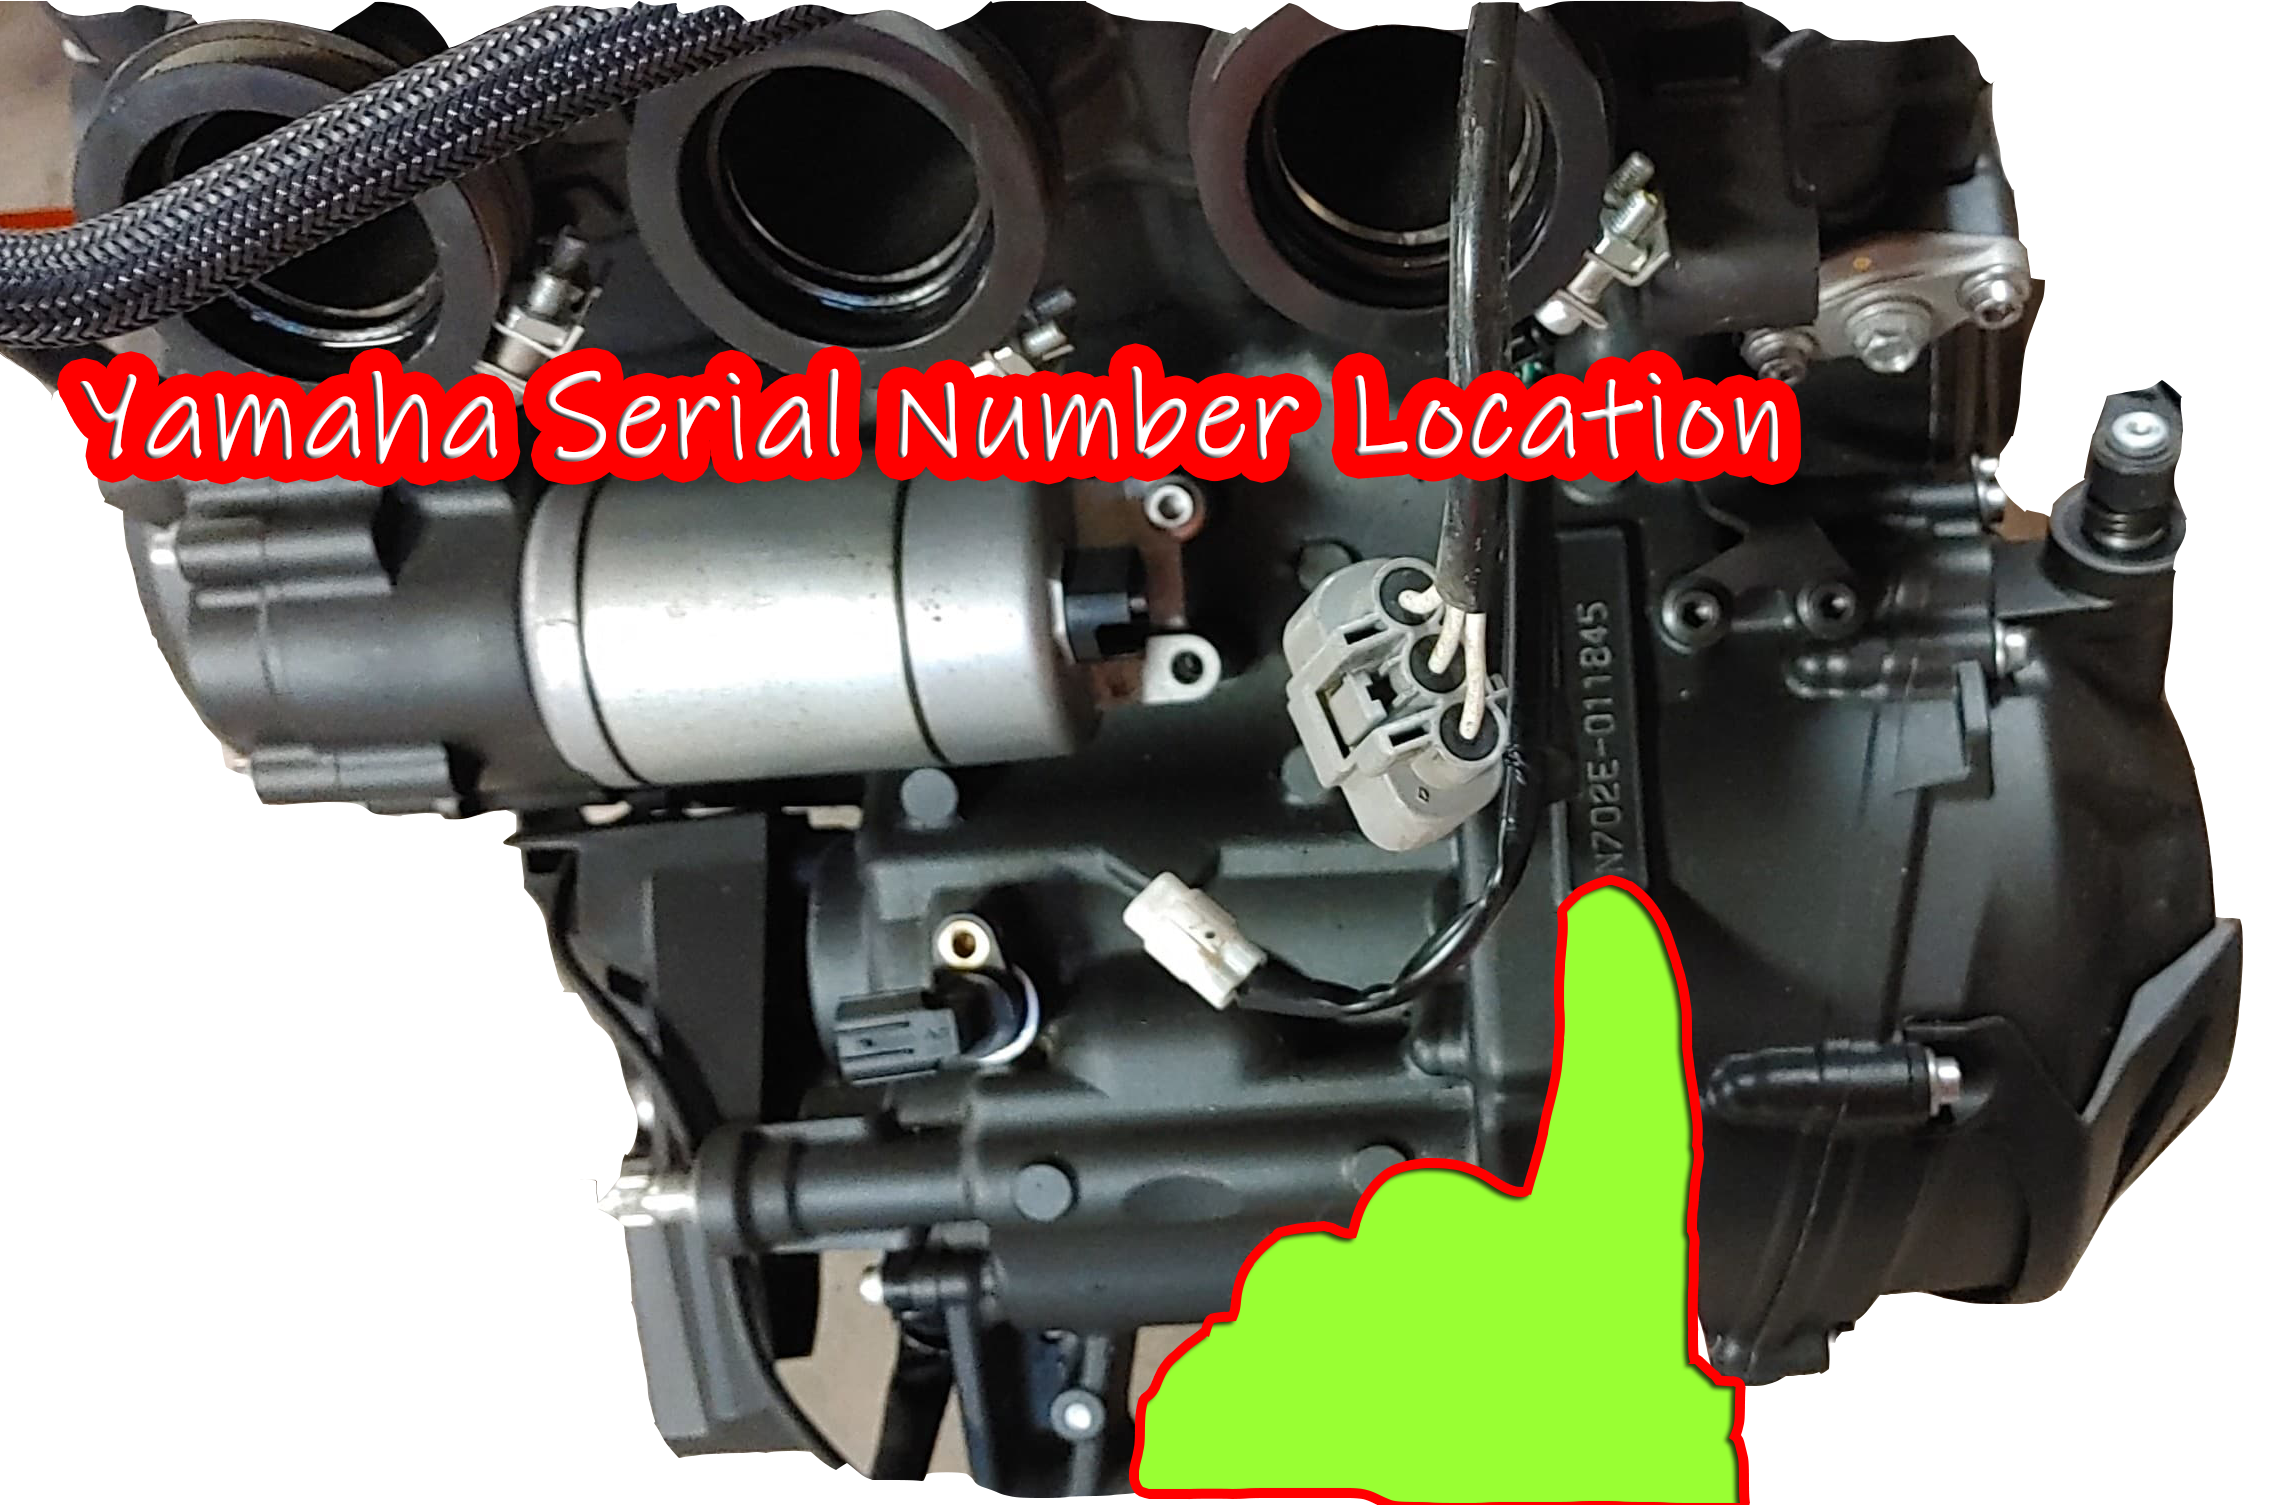 Yamaha Serial Number Identification Image